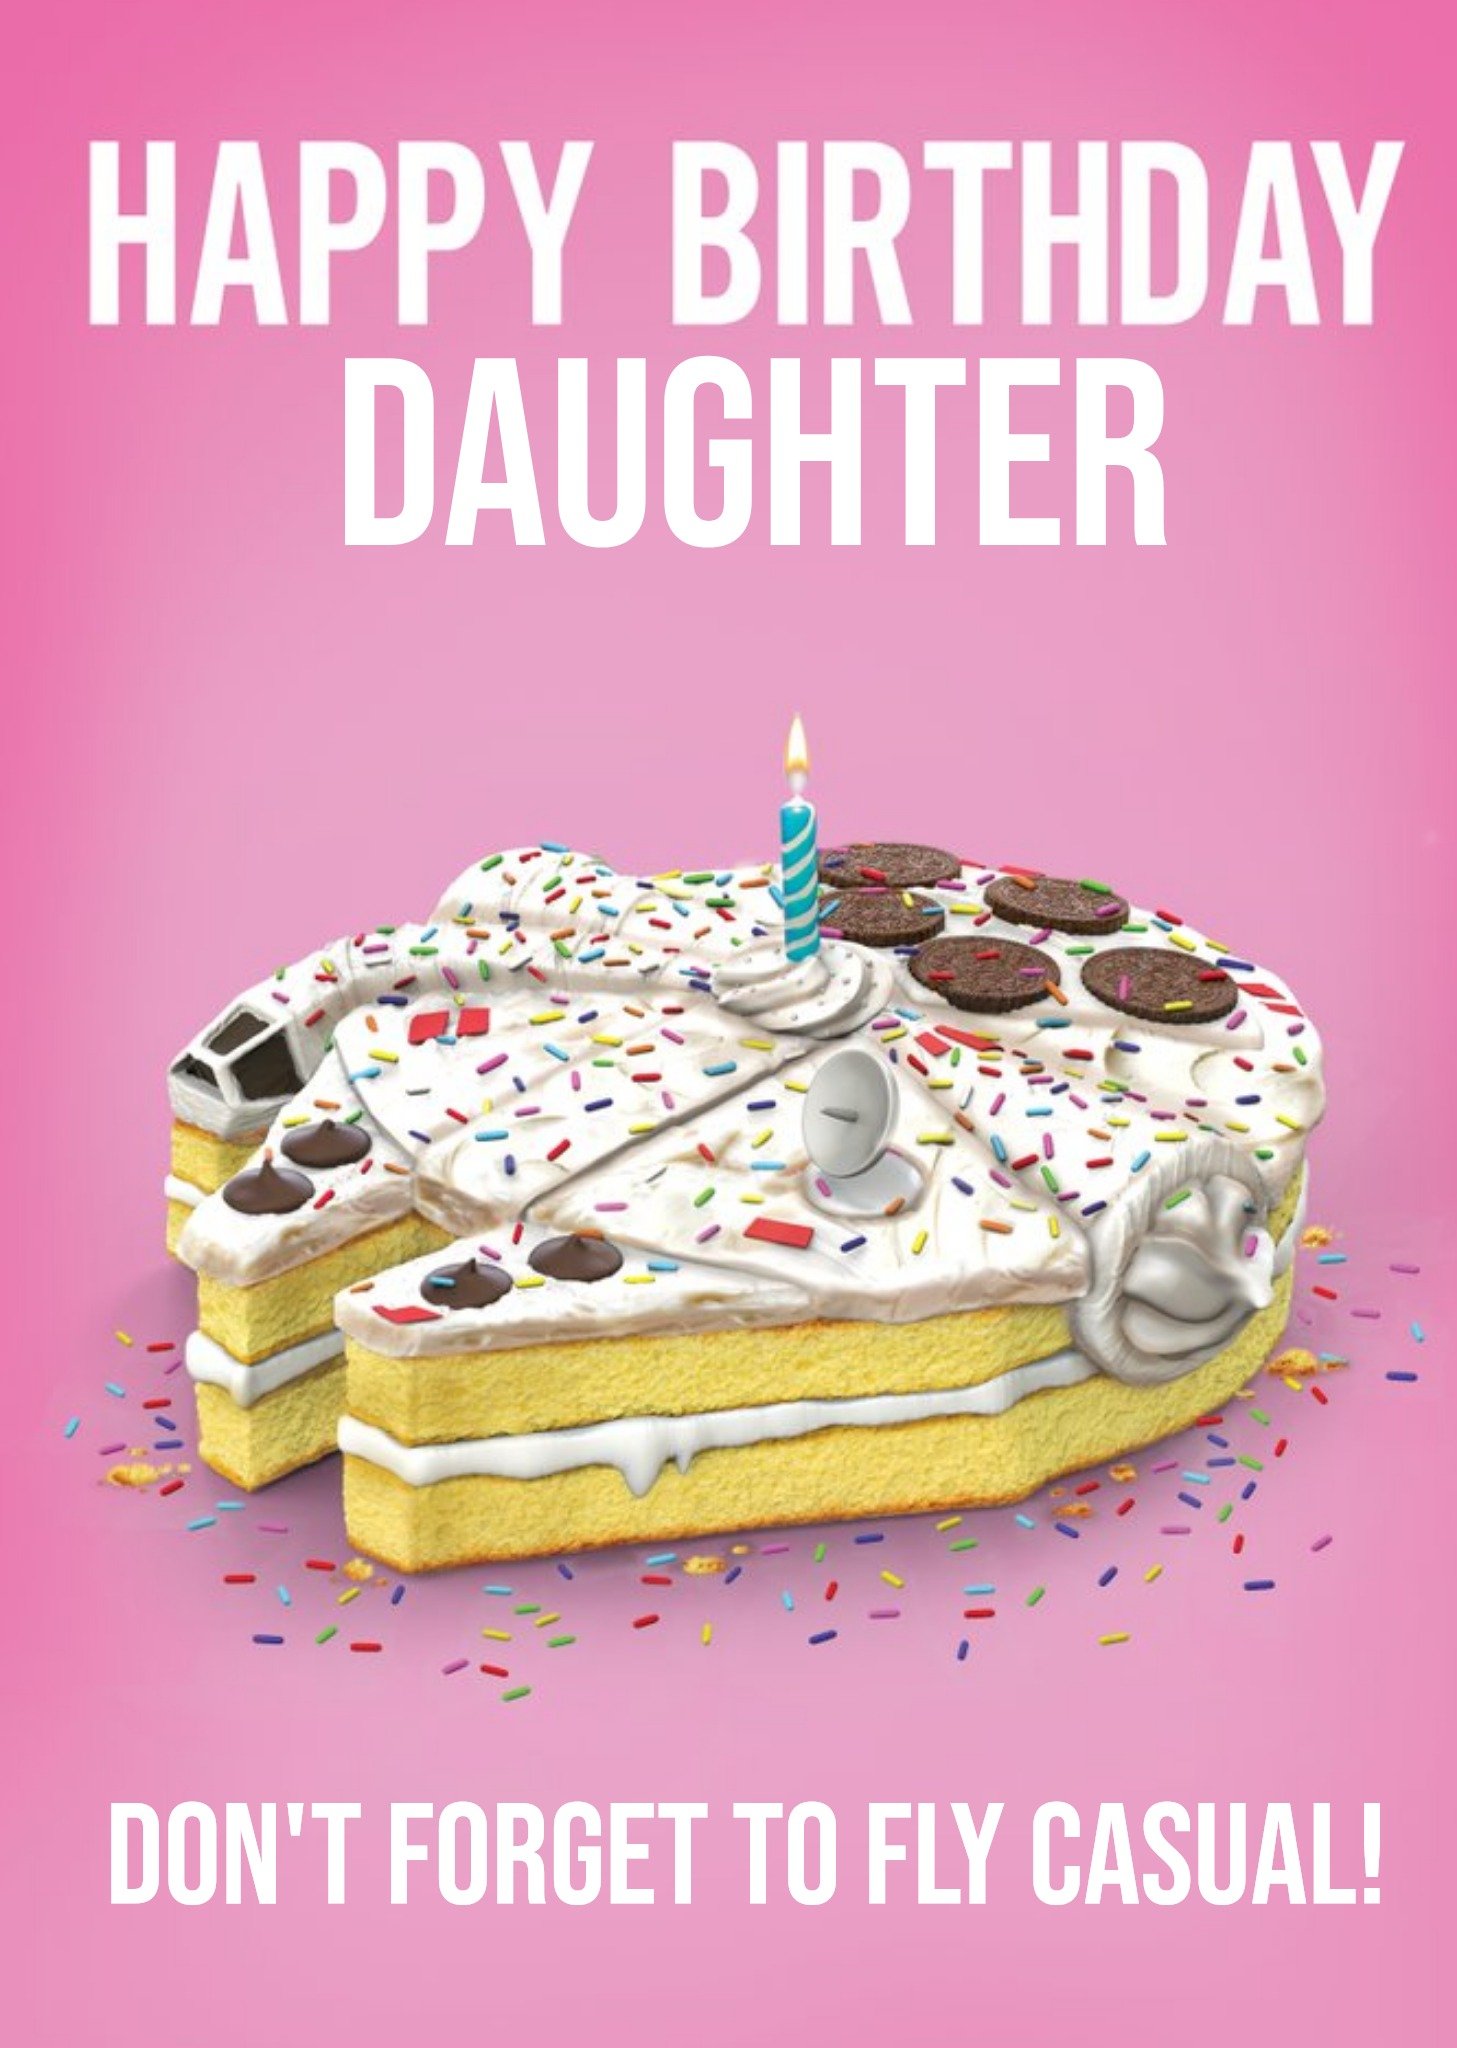 Disney Star Wars Millennium Falcon Birthday Cake Card For Your Daughter Ecard